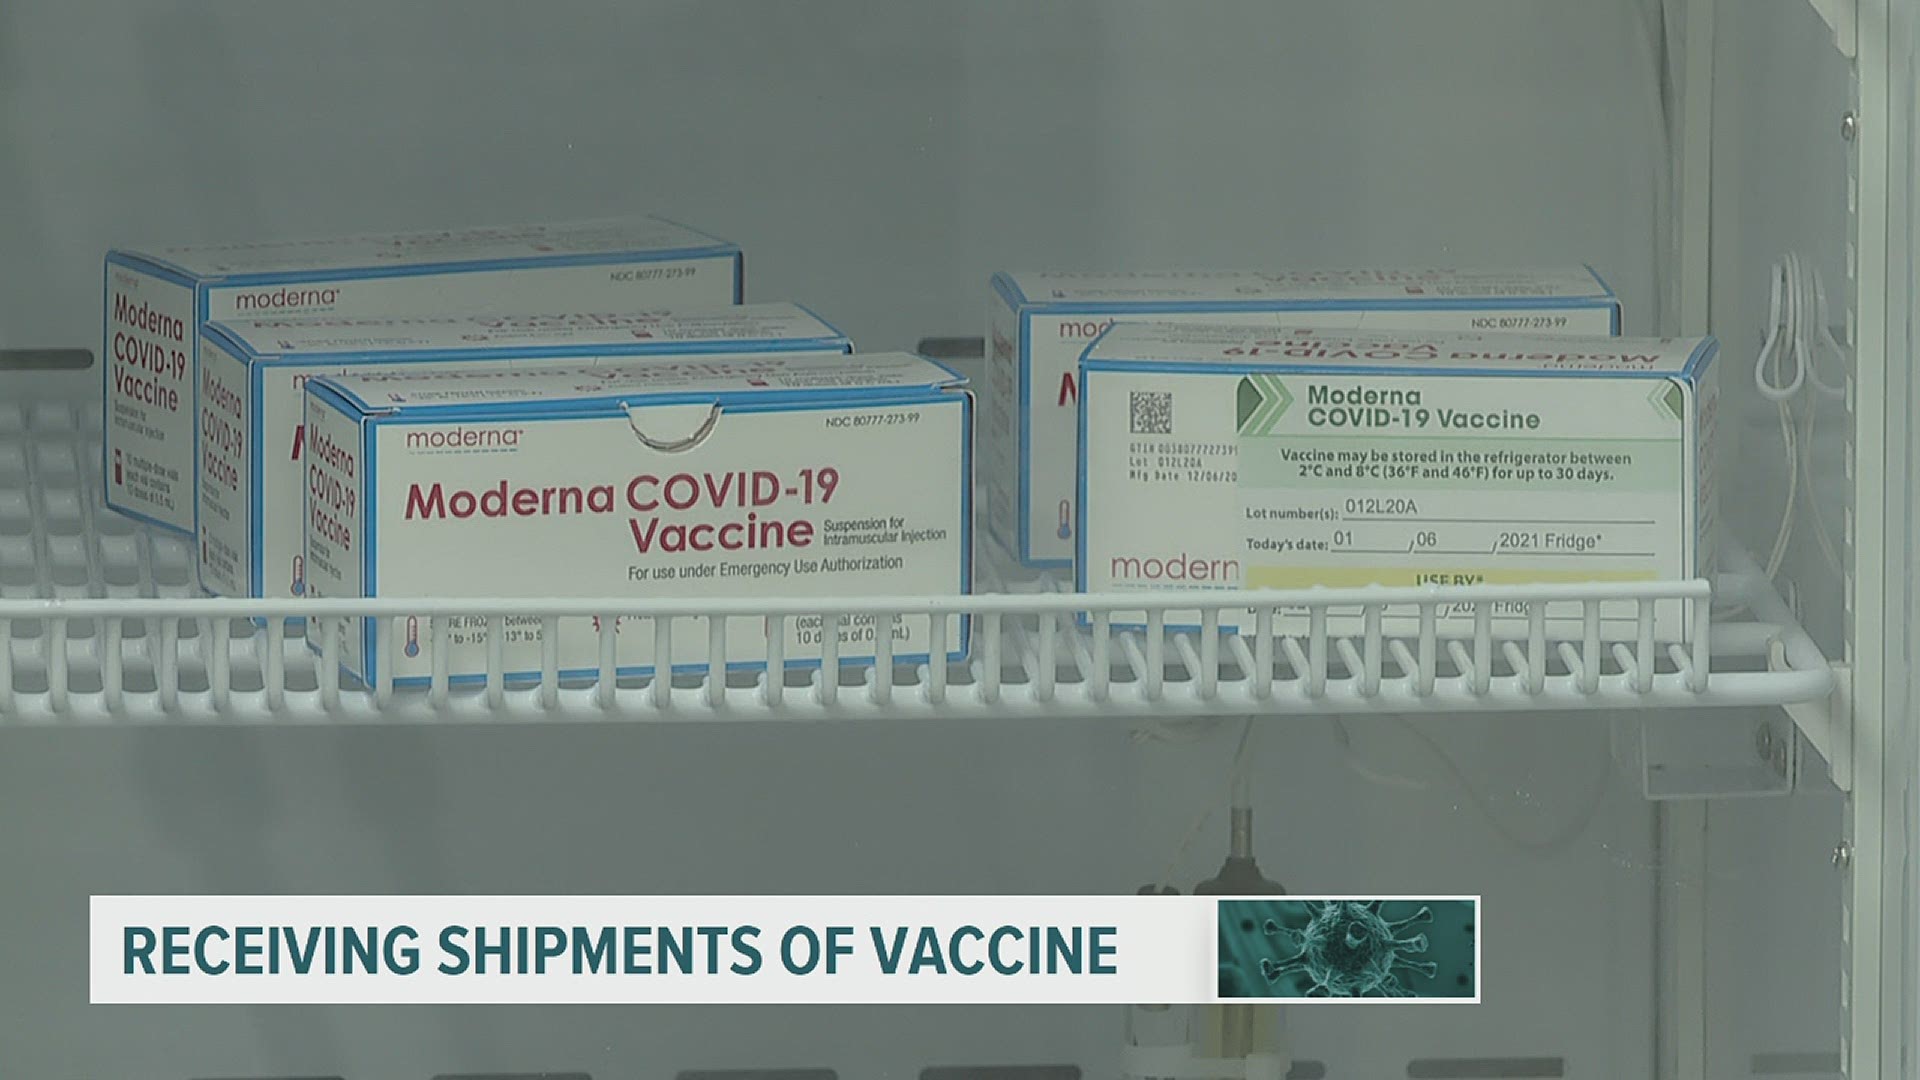 Receiving shipments of vaccine